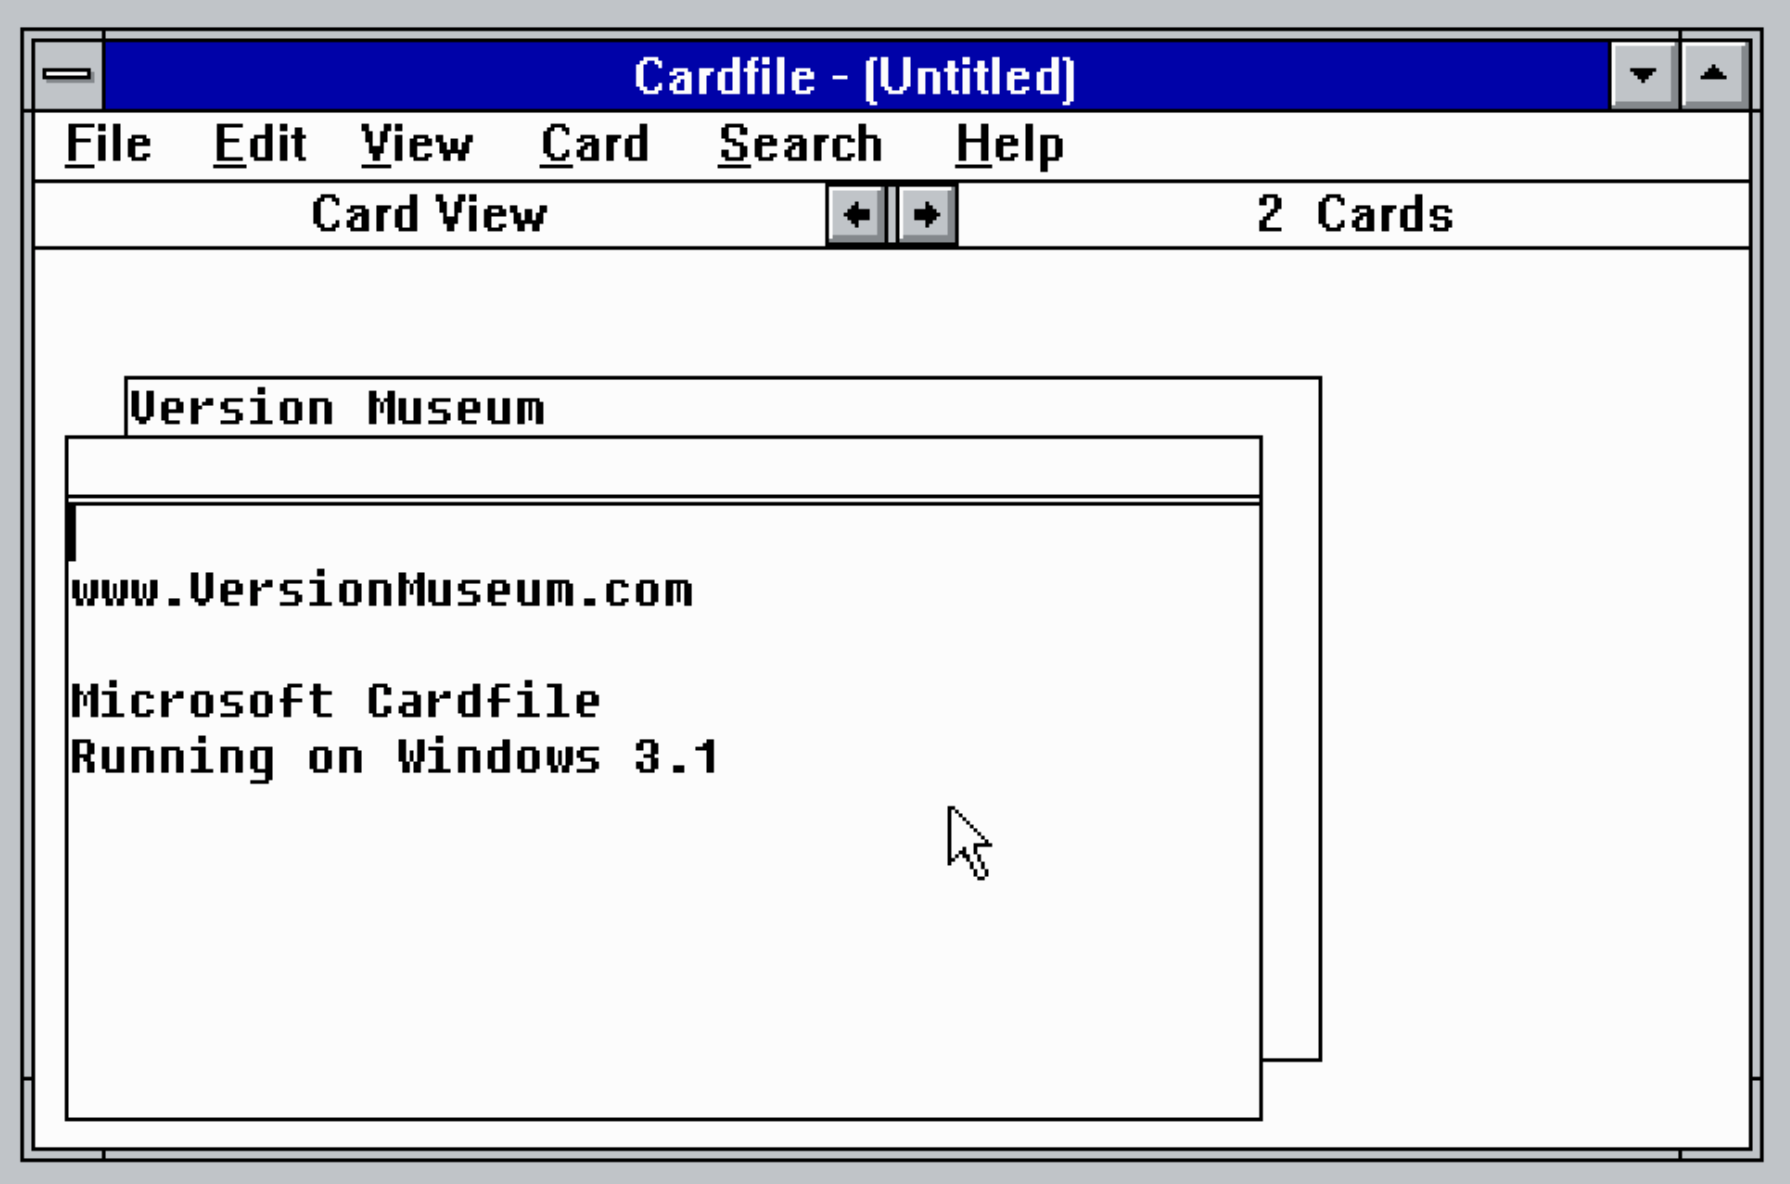 Microsoft Cardfile on Windows 3.1 (1992)